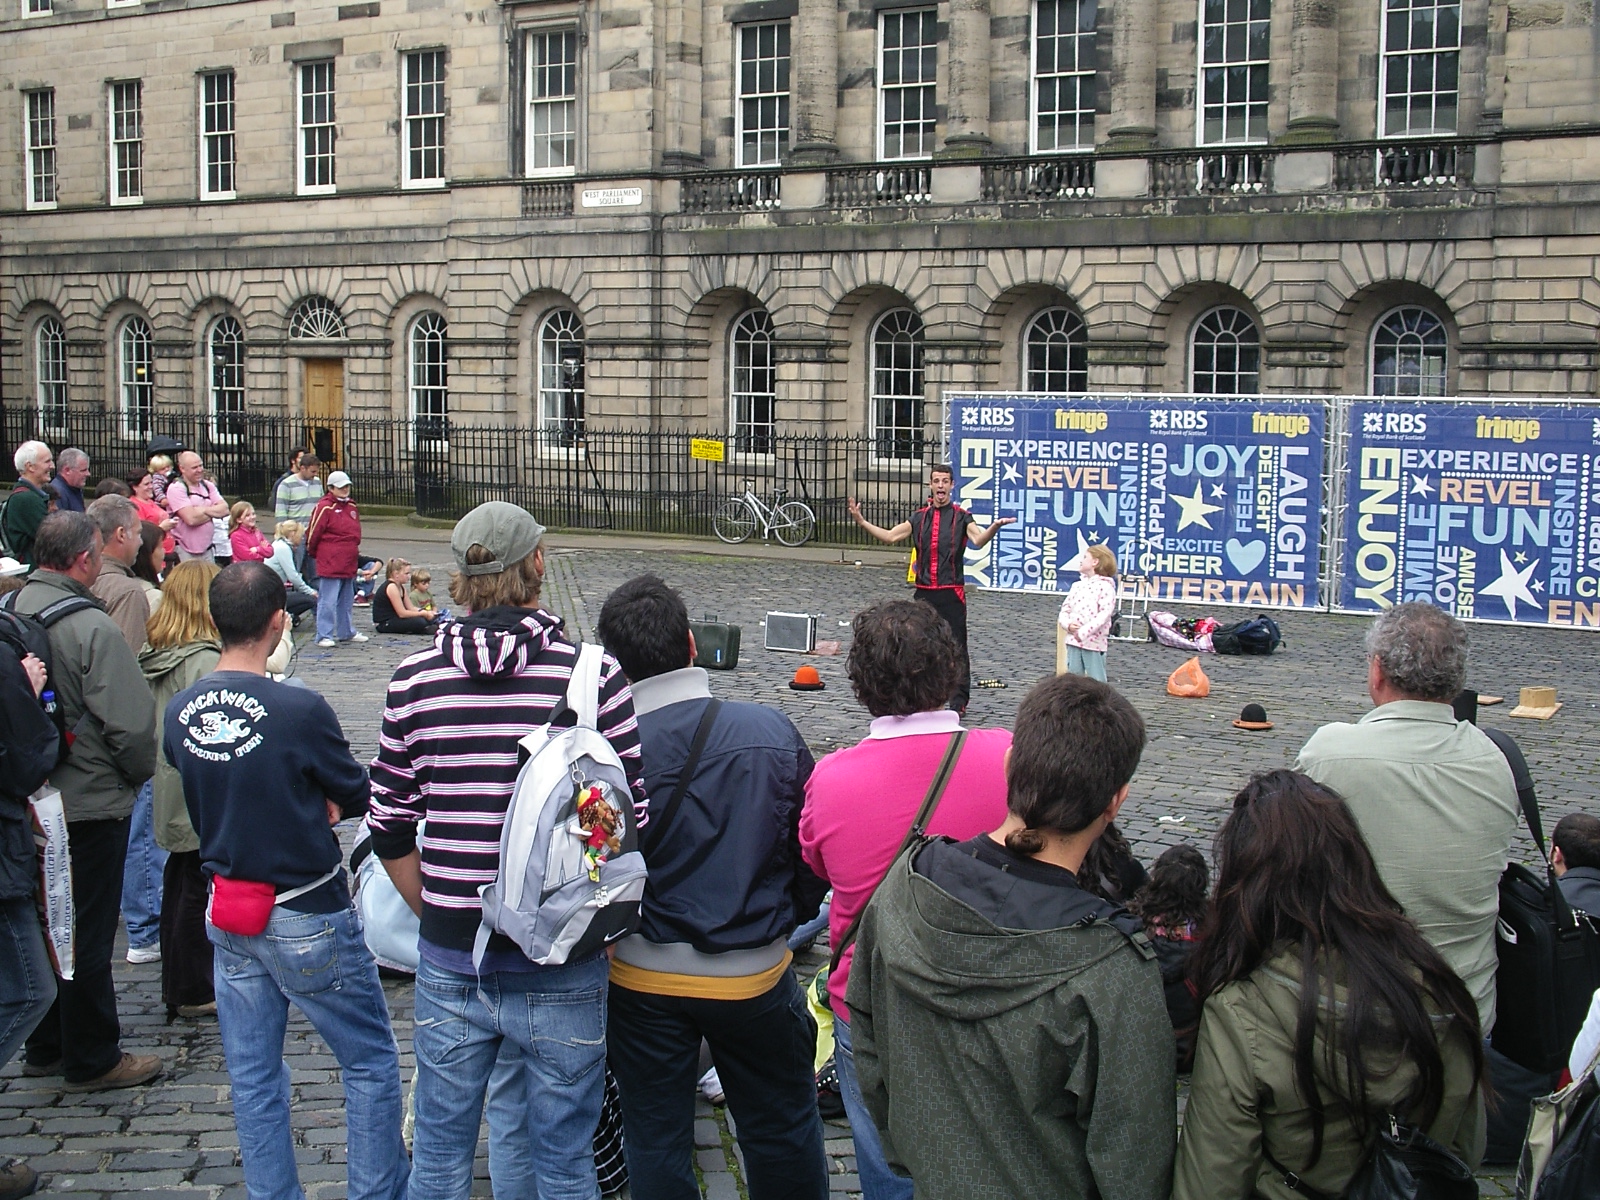 Street performance at a city square, Edinburgh, in Fringe Festival